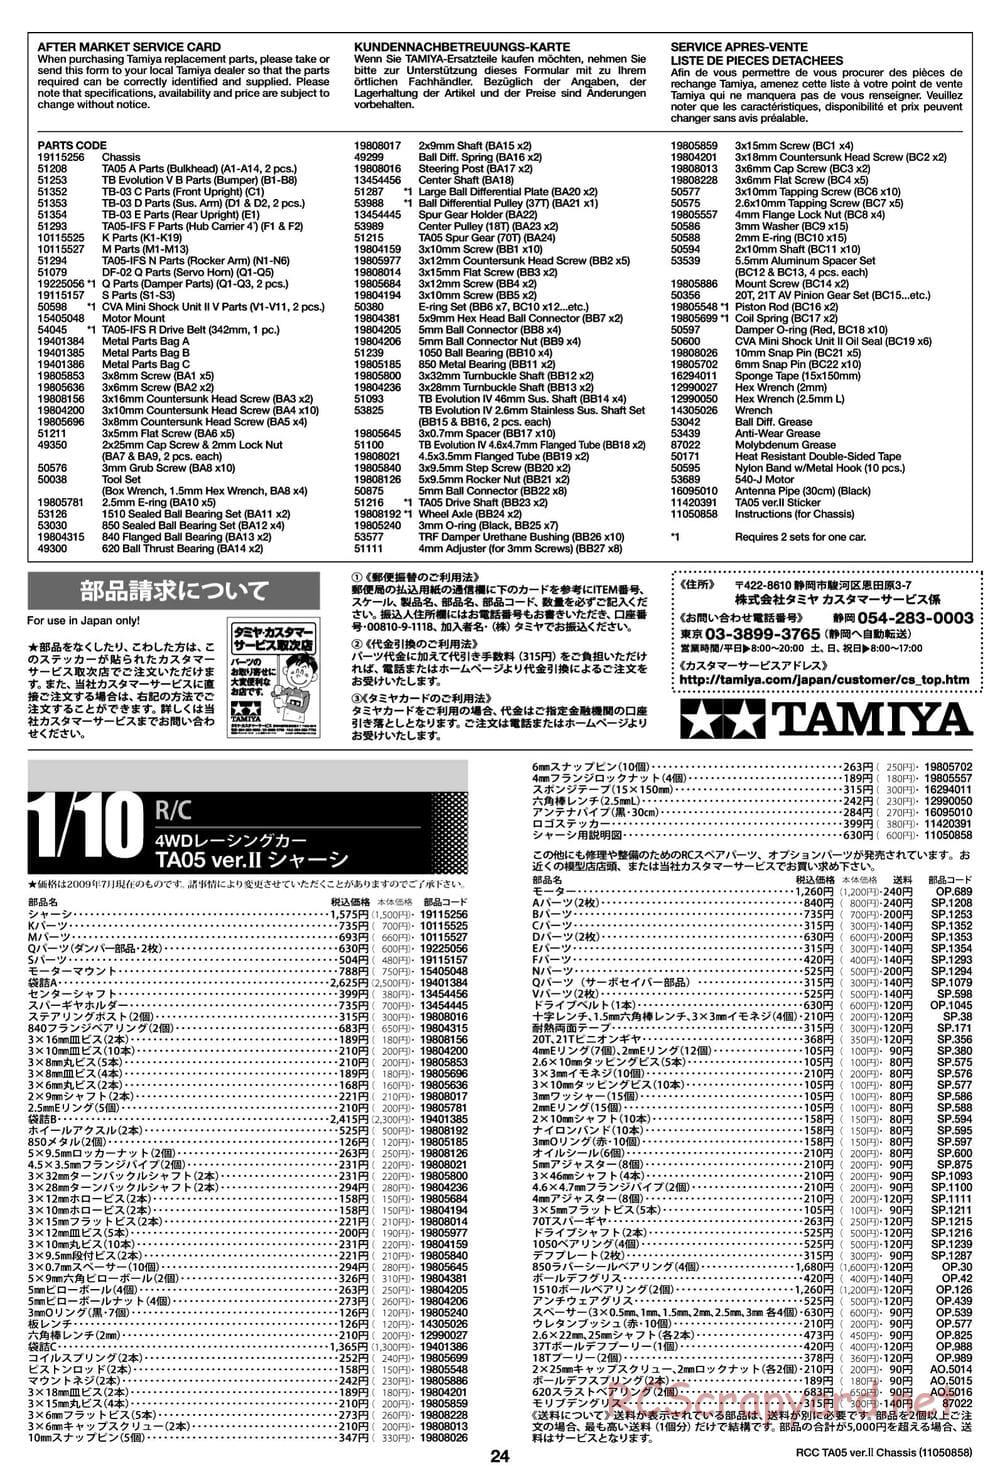 Tamiya - TA05 Ver.II Chassis - Manual - Page 24